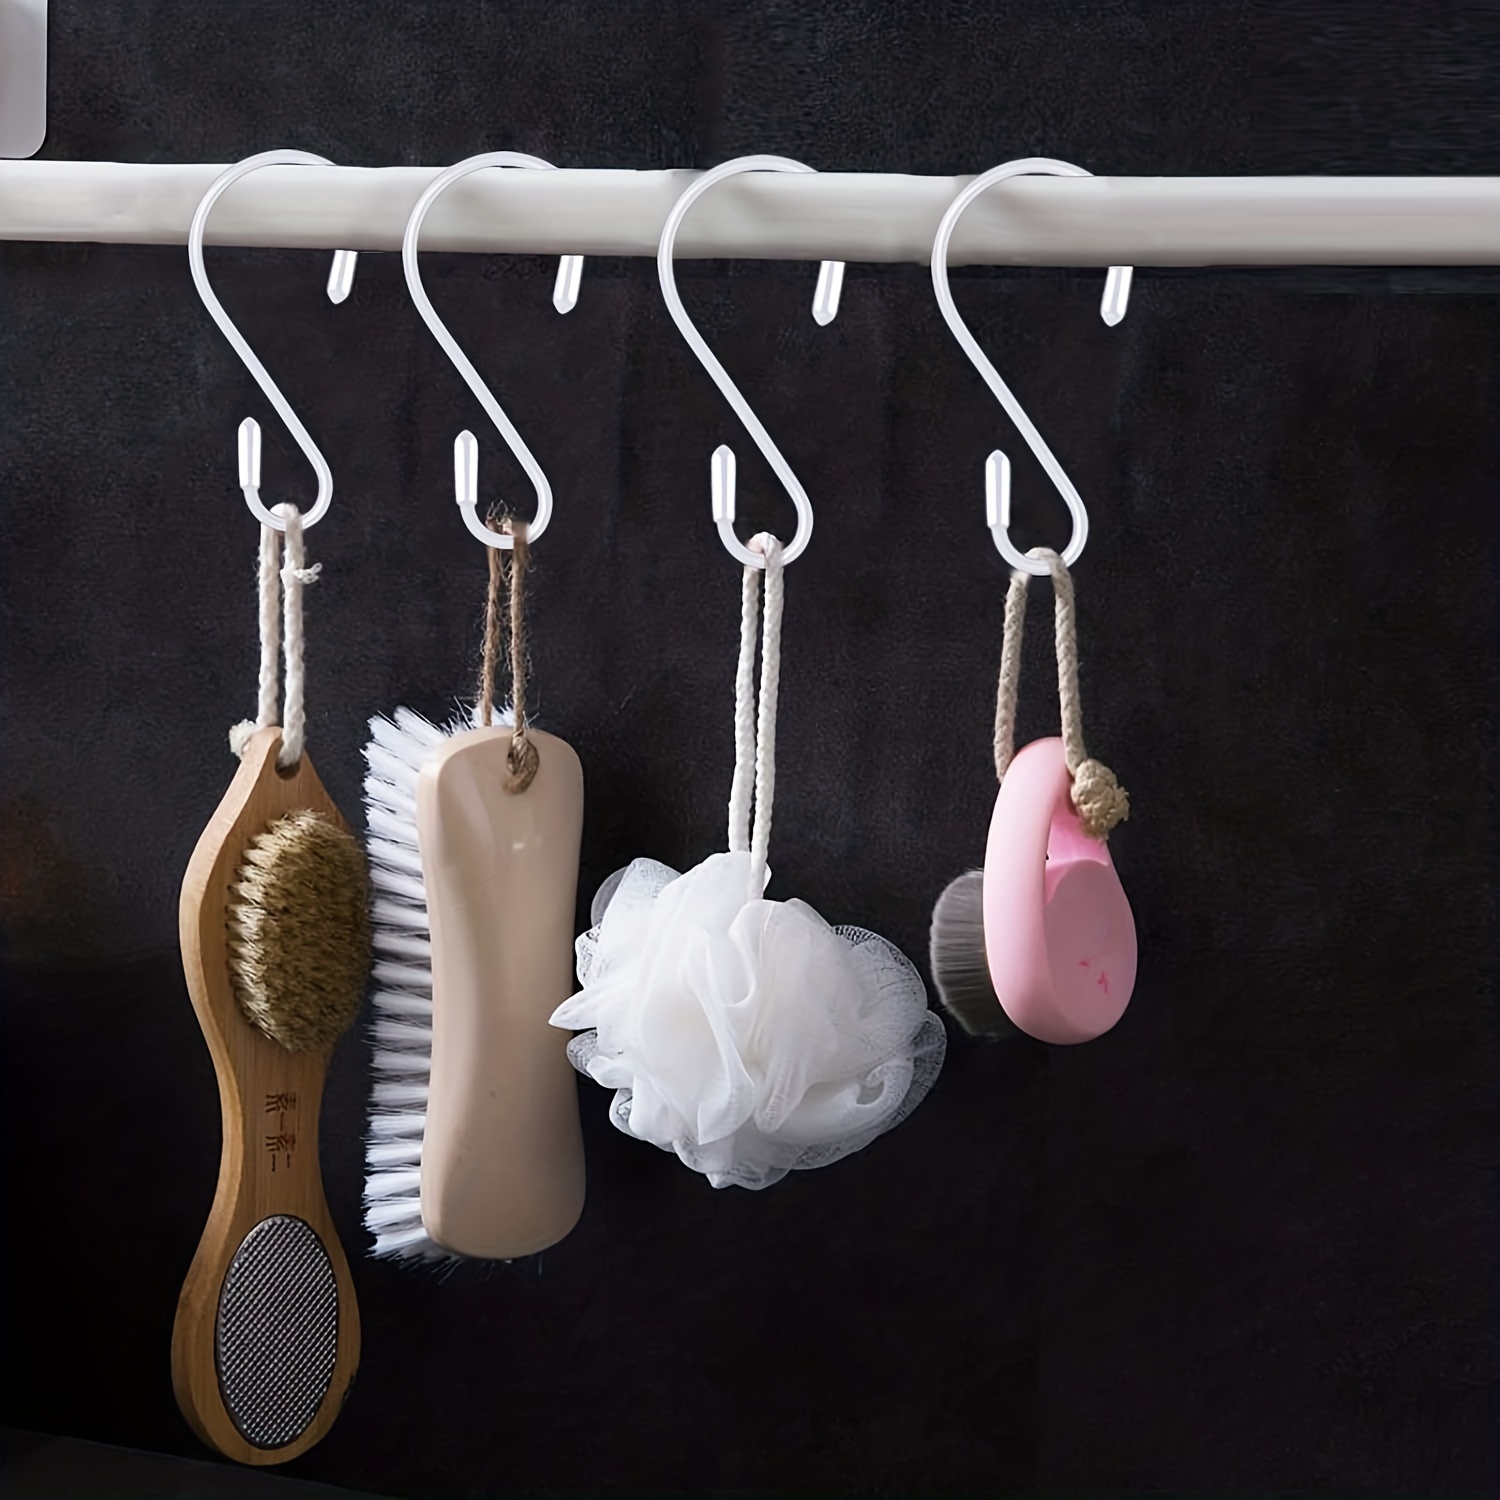 Wall.hooksheavy-duty Cast Iron S-hooks For Hanging - Versatile Kitchen &  Bathroom Towel Hooks